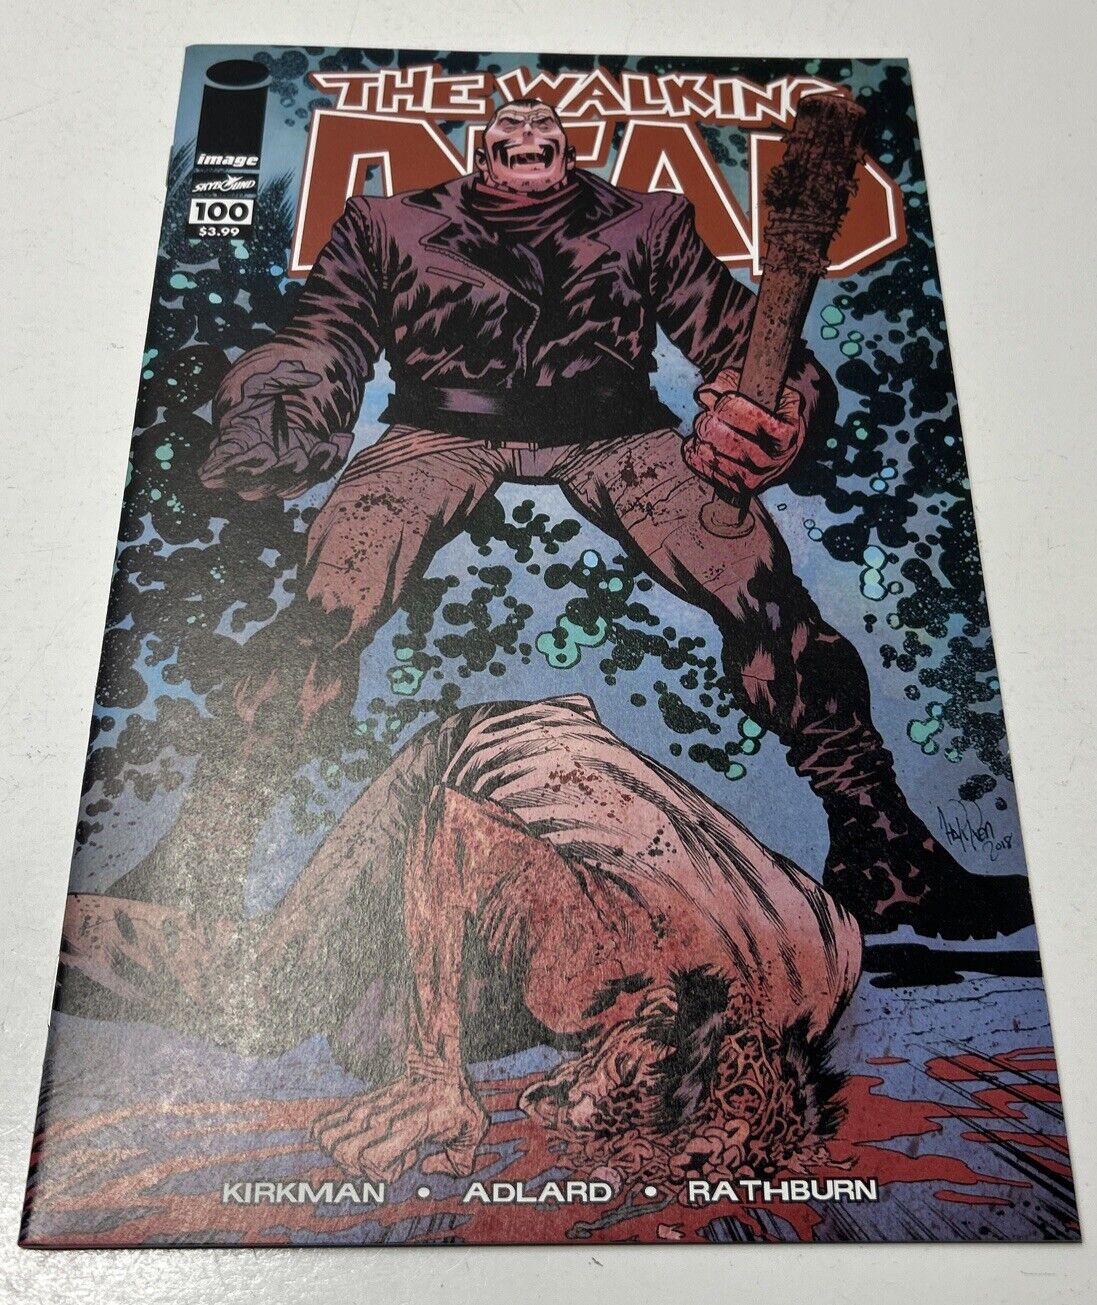 The Walking Dead Comic Issue 100 Harren 15th Anniversary Variant Robert Kirkman